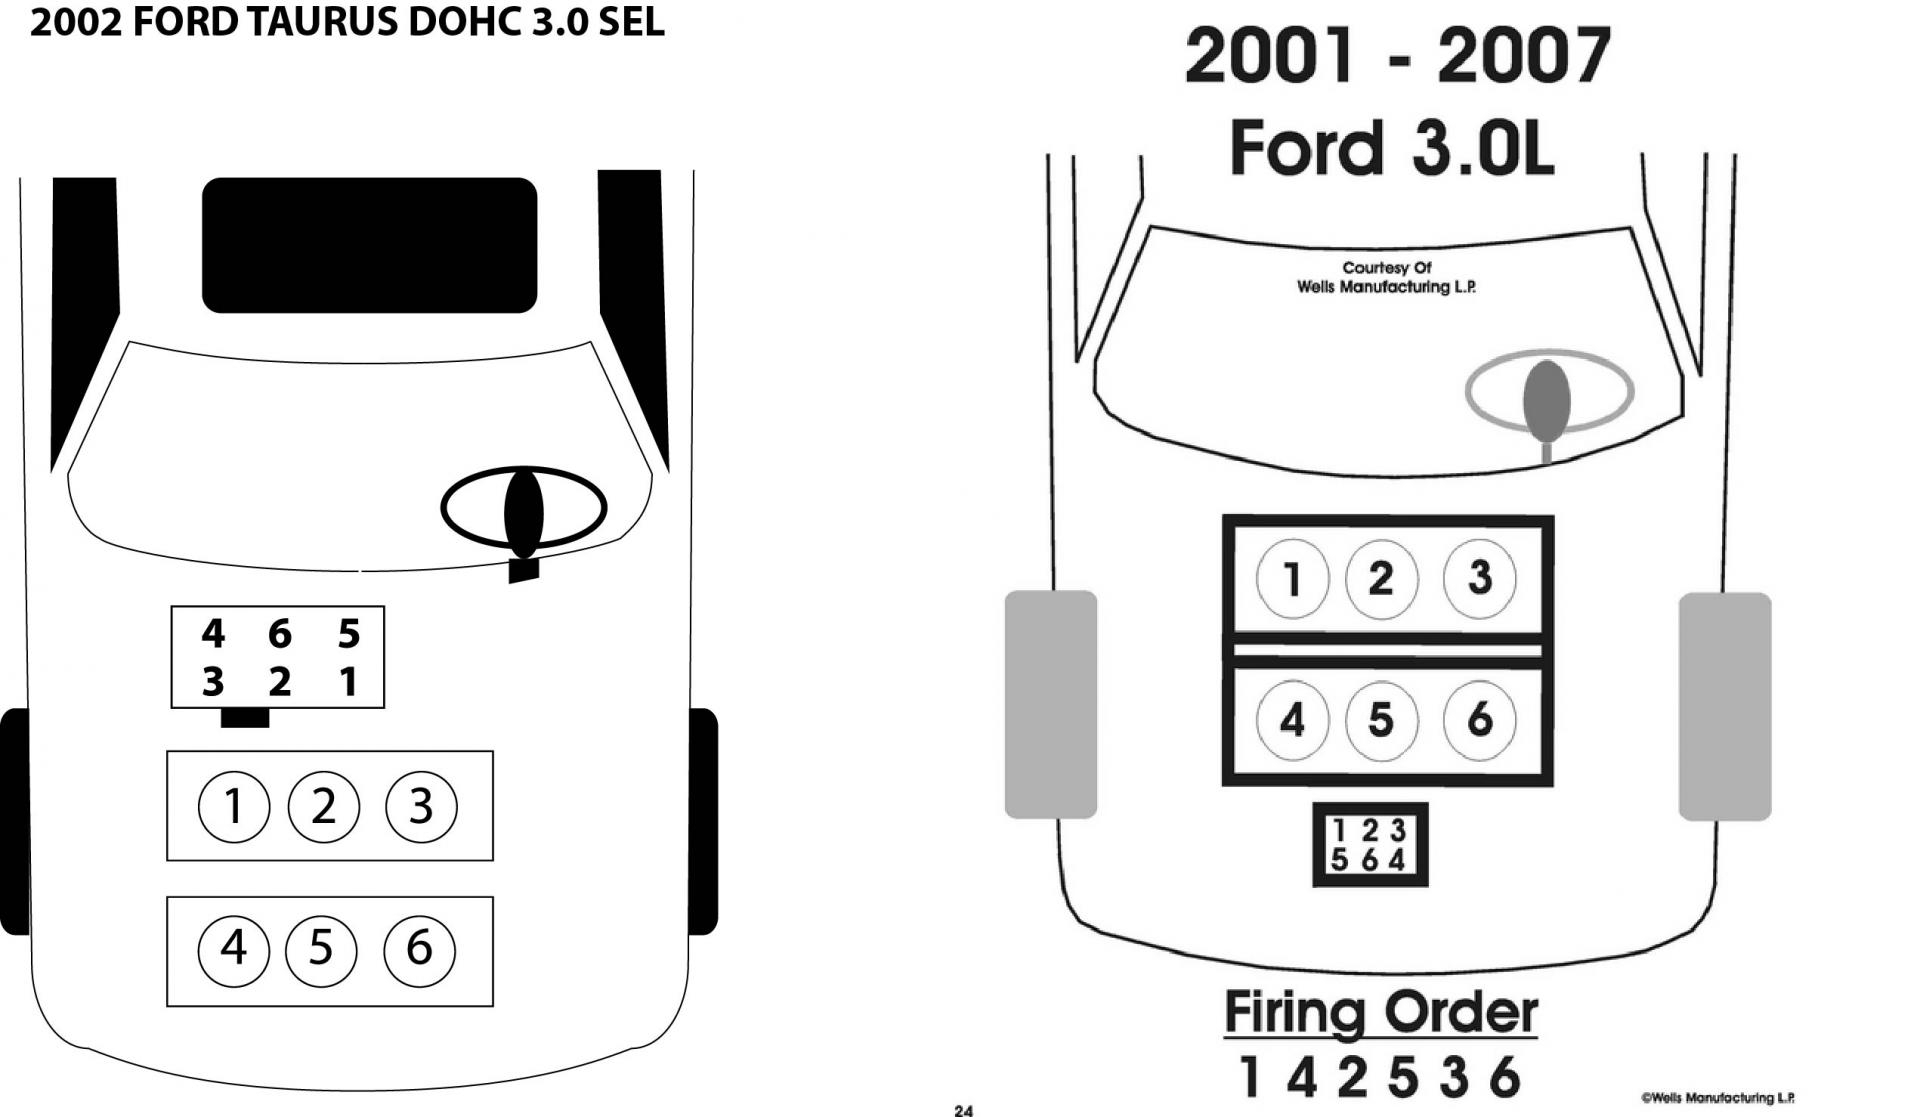 2005 Ford Taurus 3.0 Firing Order